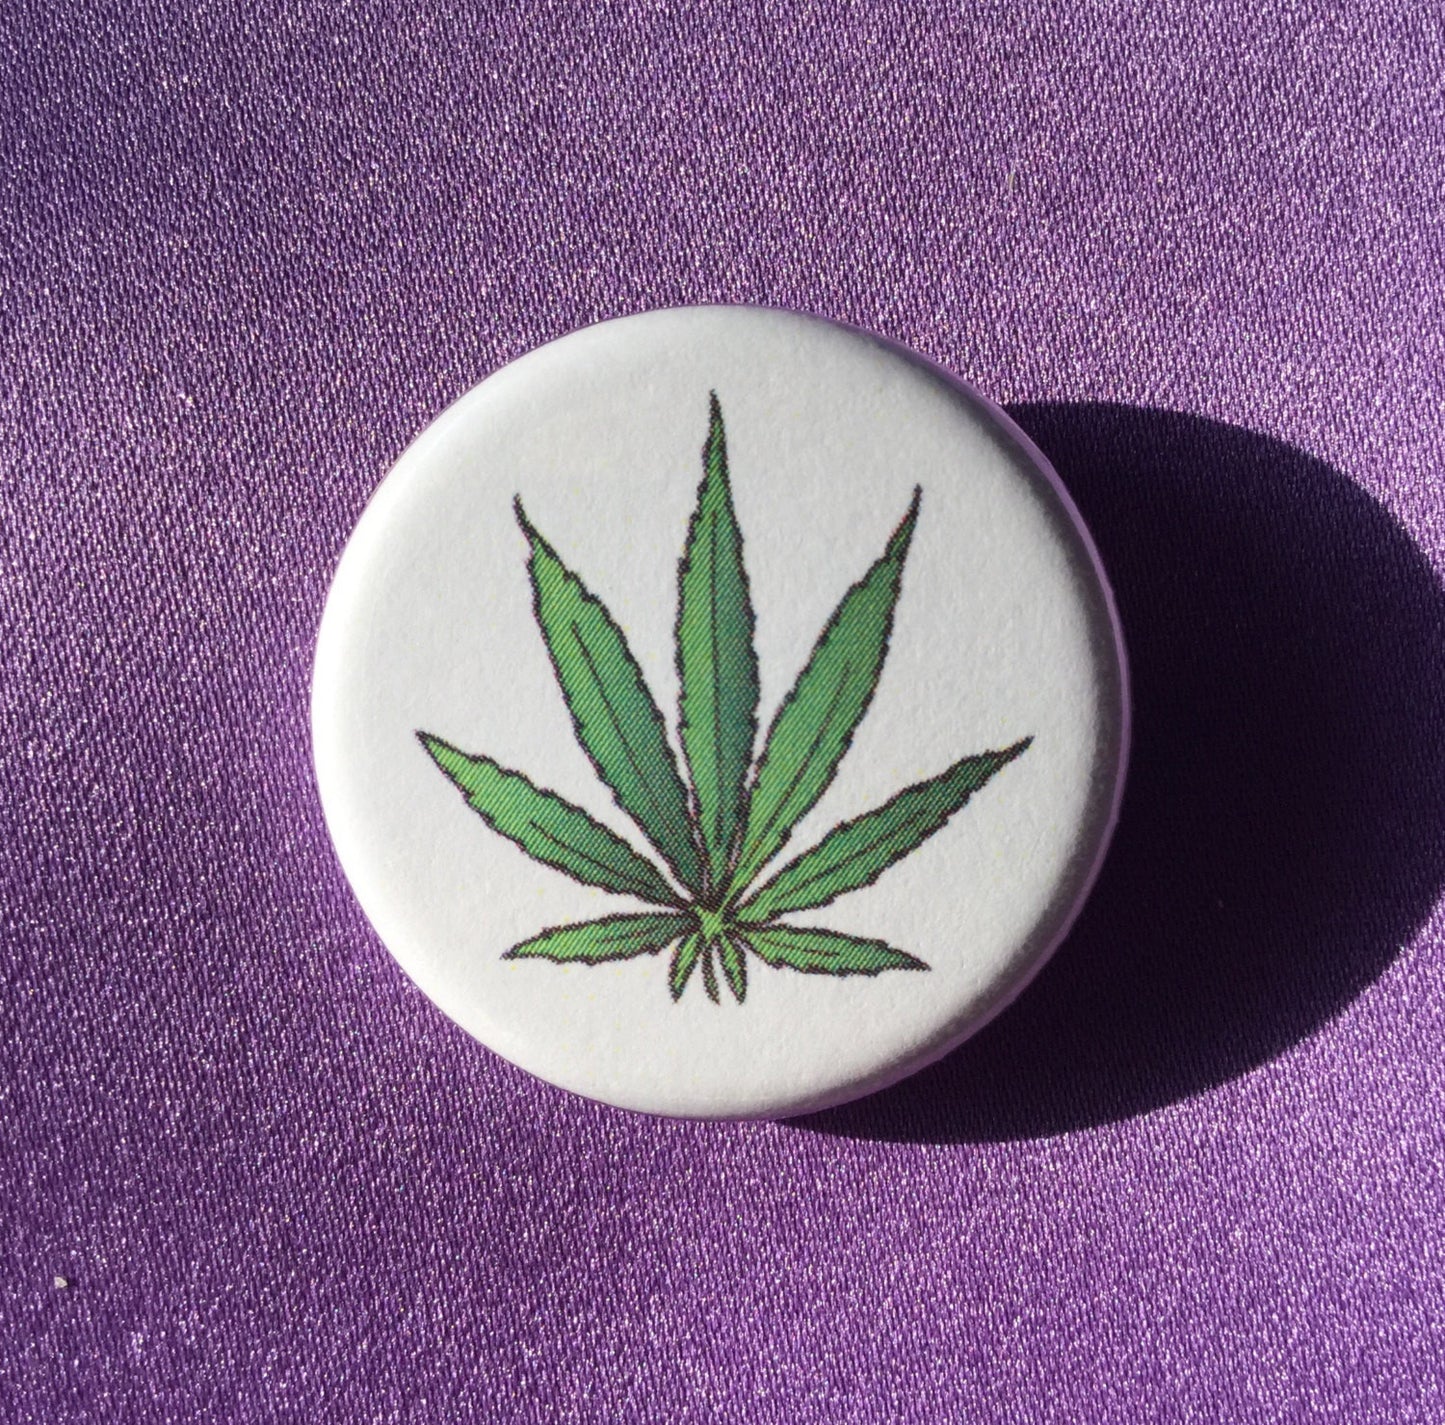 Cannabis leaf button - Radical Buttons